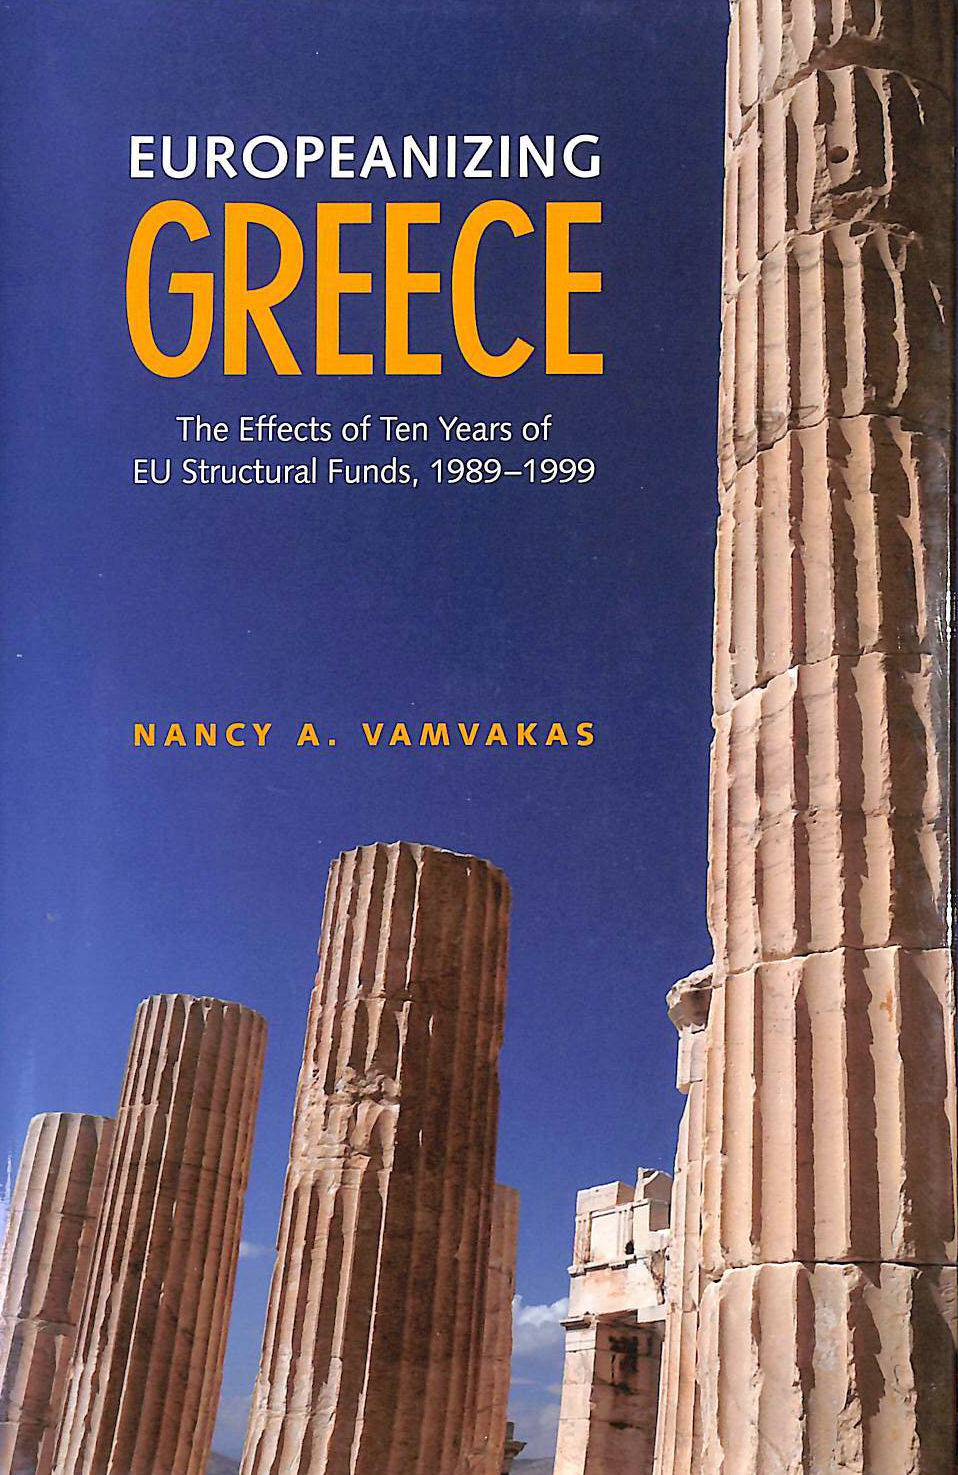 NANCY VAMVAKAS - Europeanizing Greece: The Effects of Ten Years of EU Structural Funds, 1989-1999 (European Union Studies)